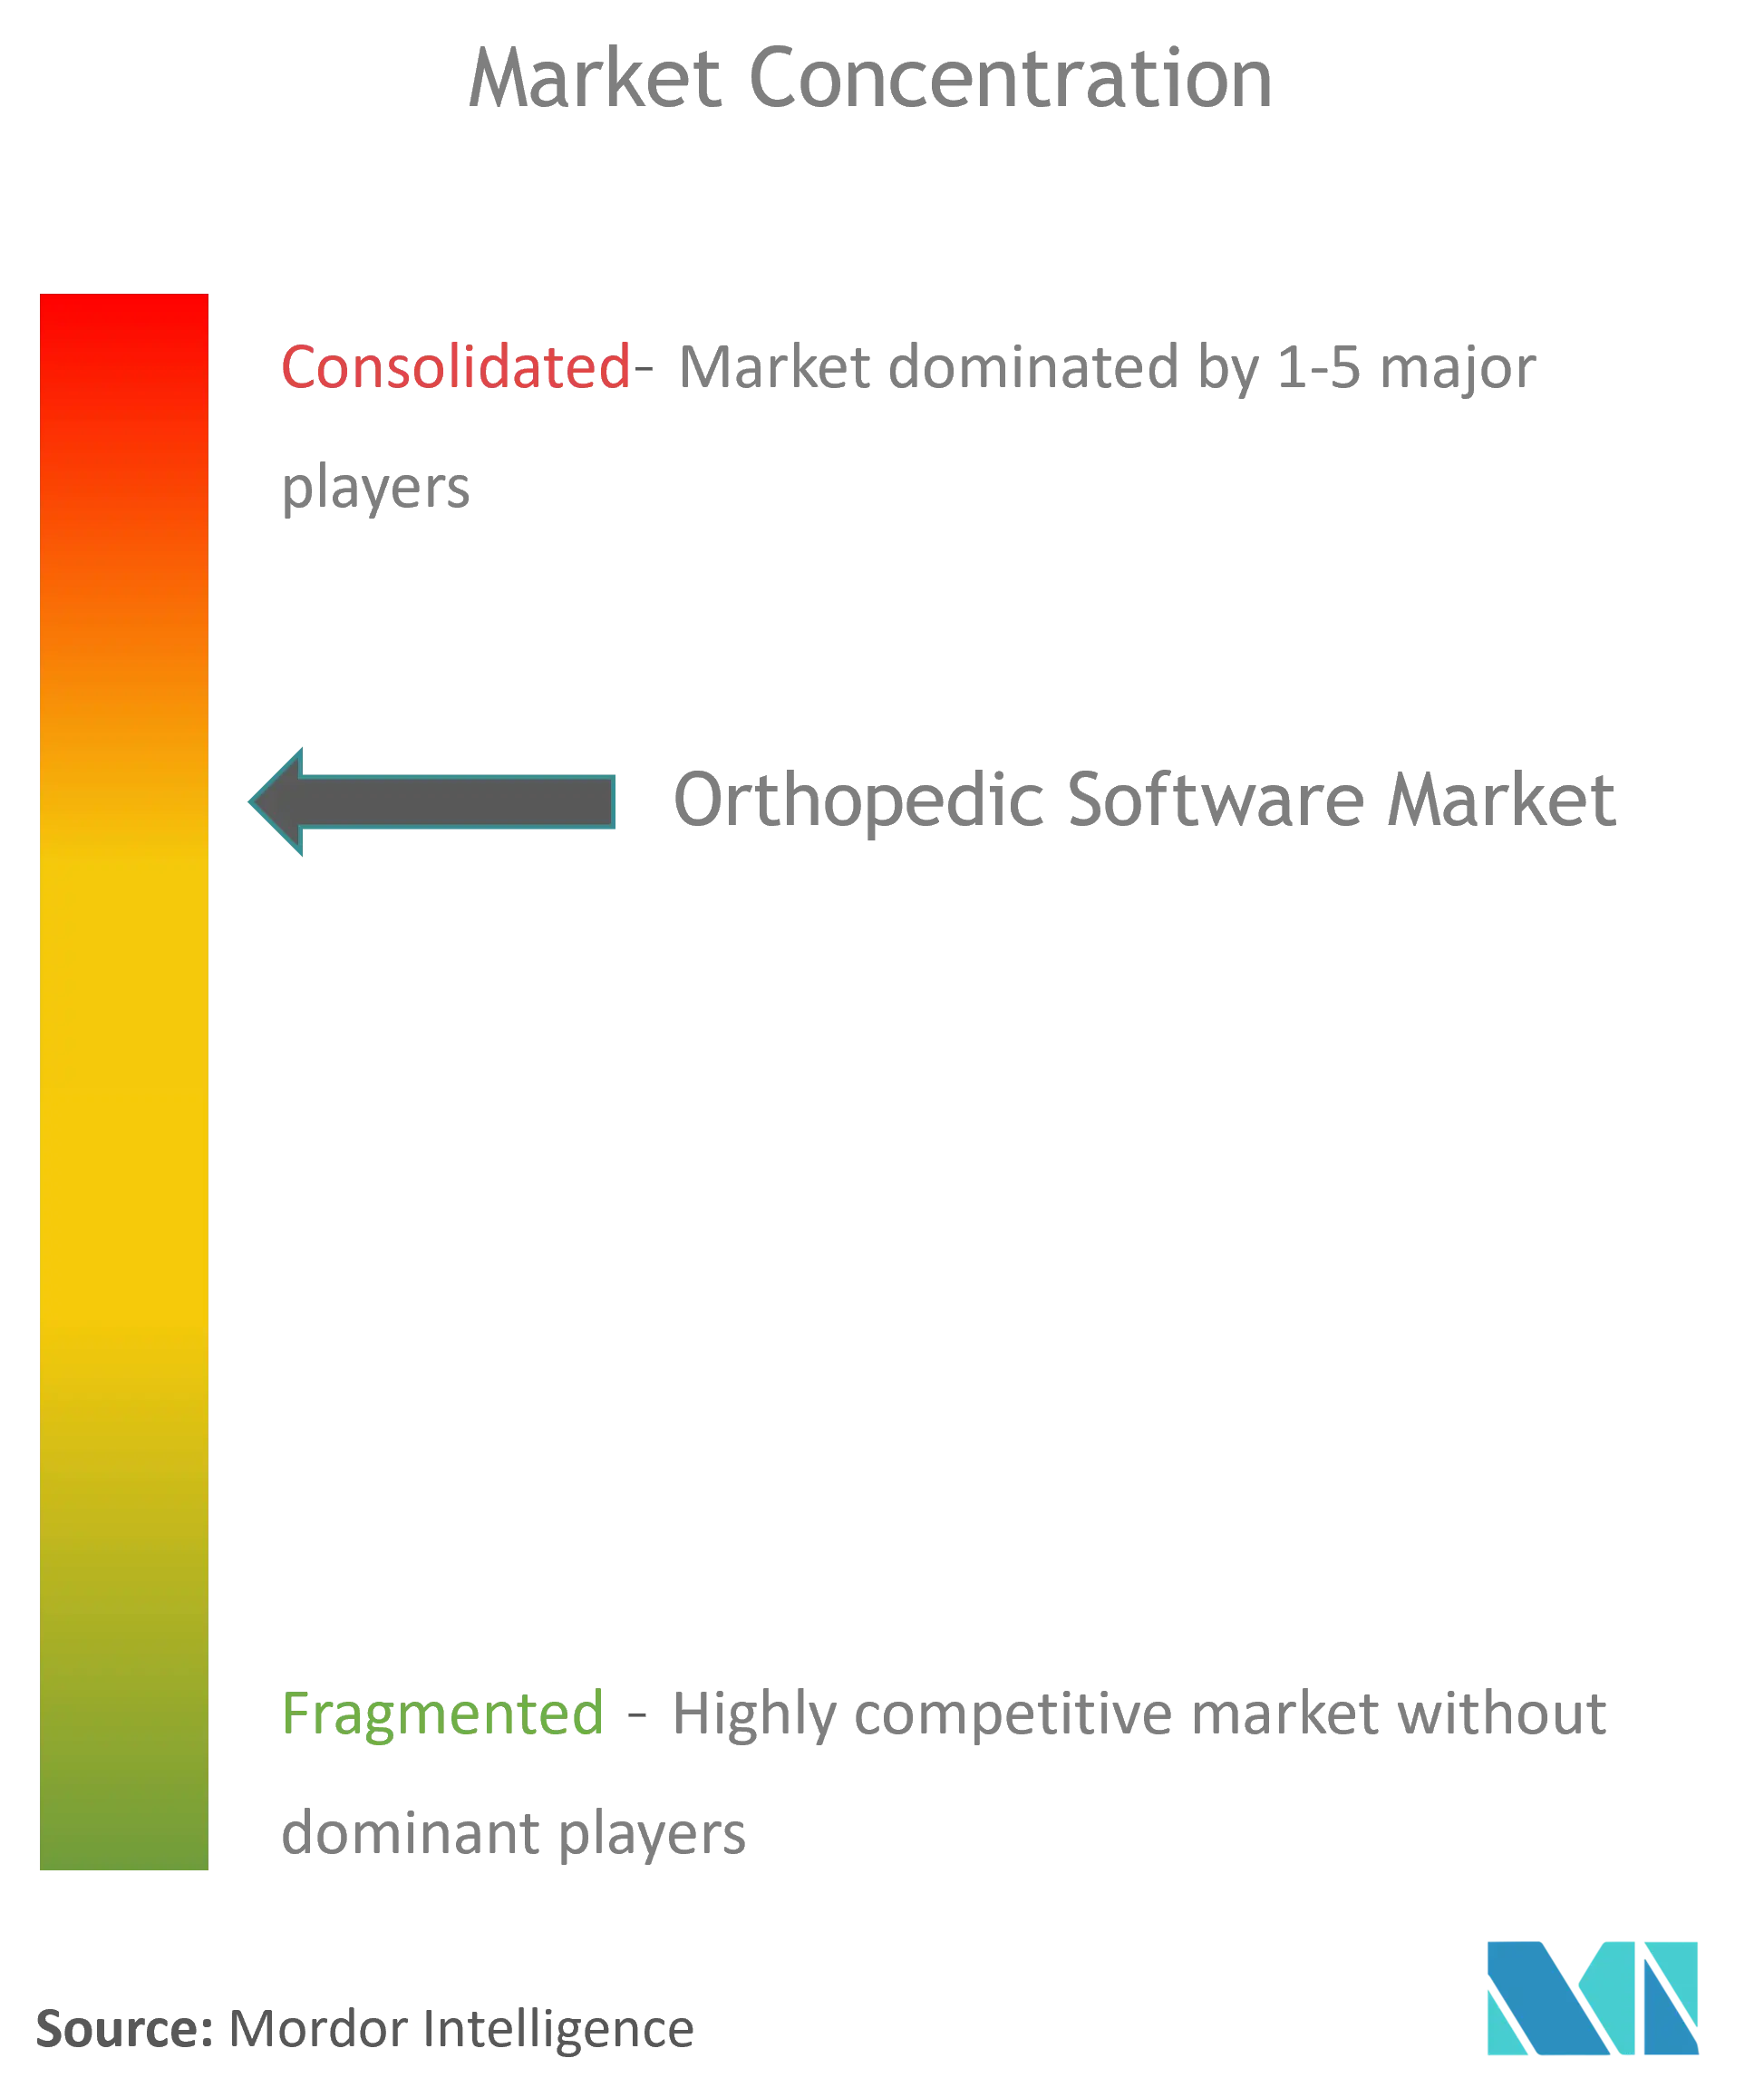 Orthopedic Software Market Concentration